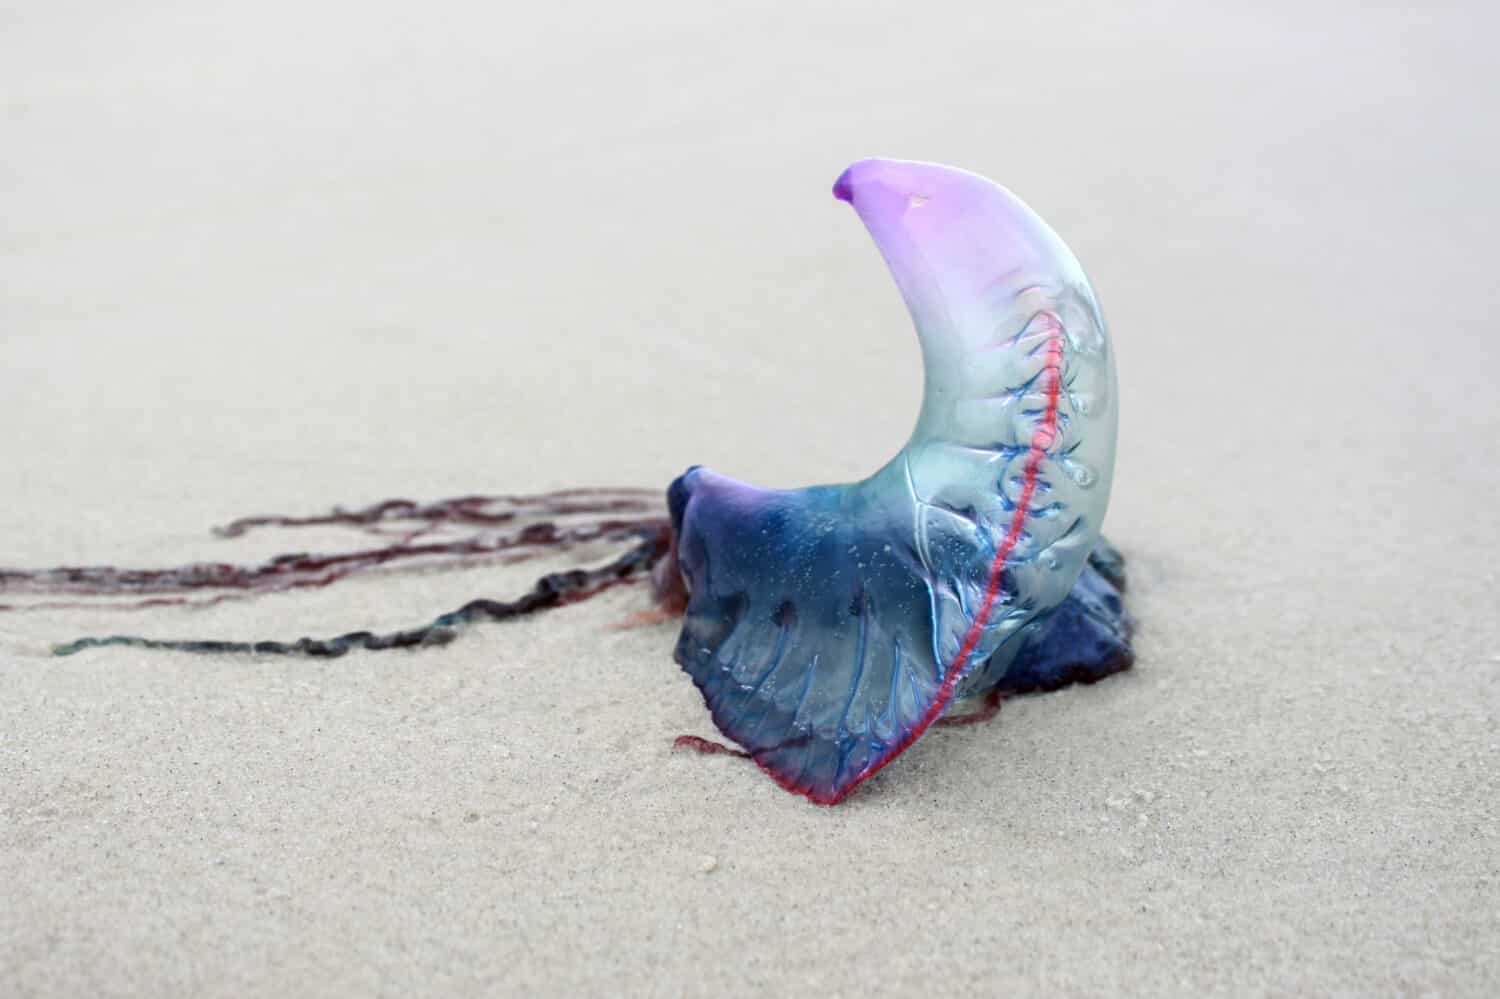 Portuguese man-o’-war jellyfish on the beach sand